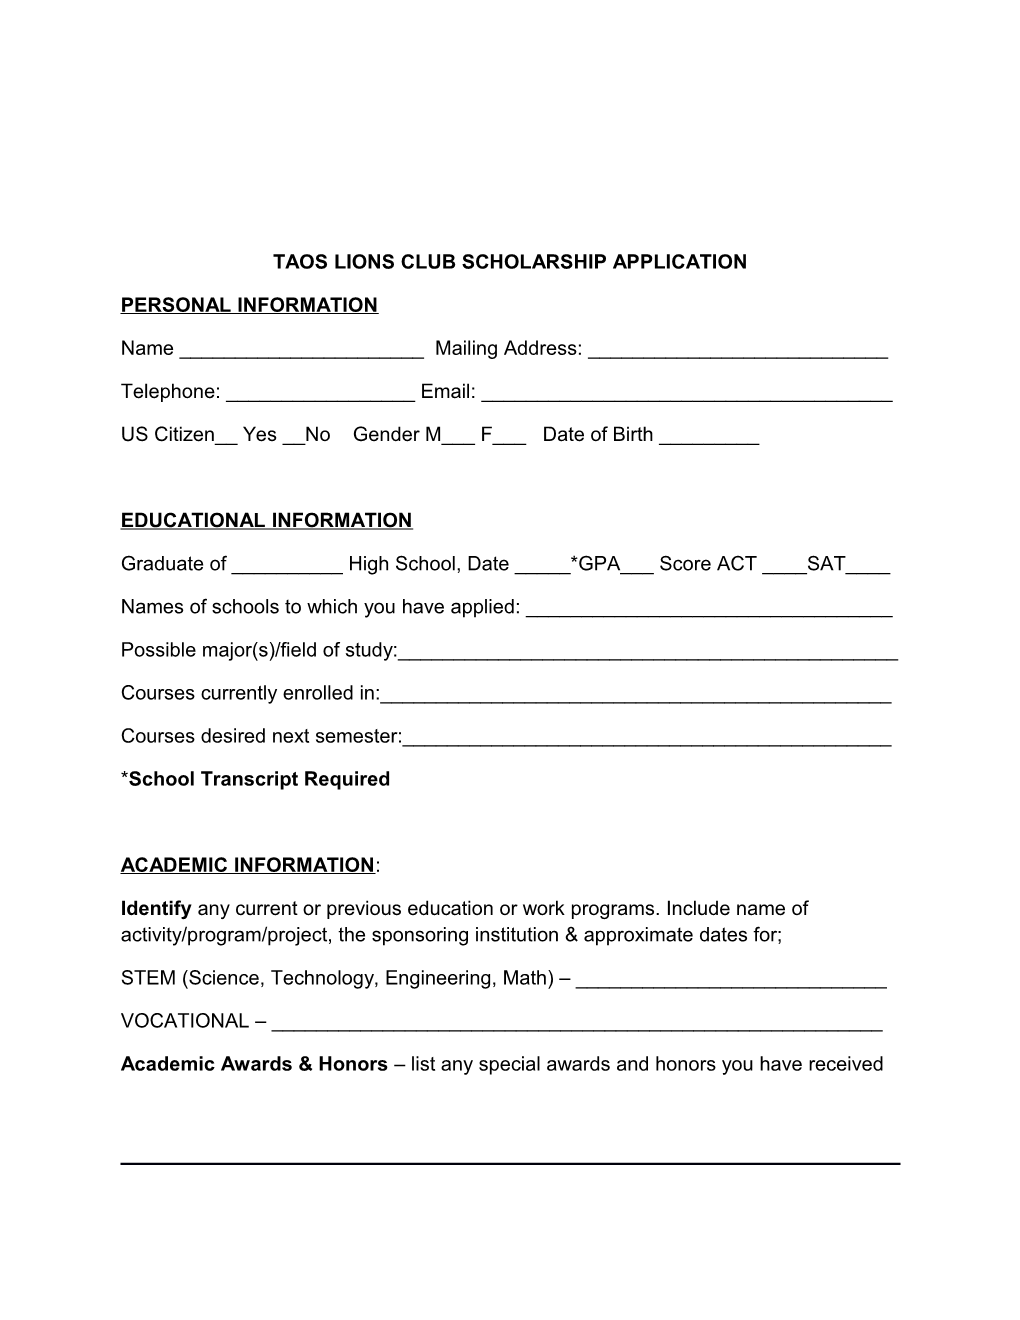 Taos Lions Club Scholarship Application